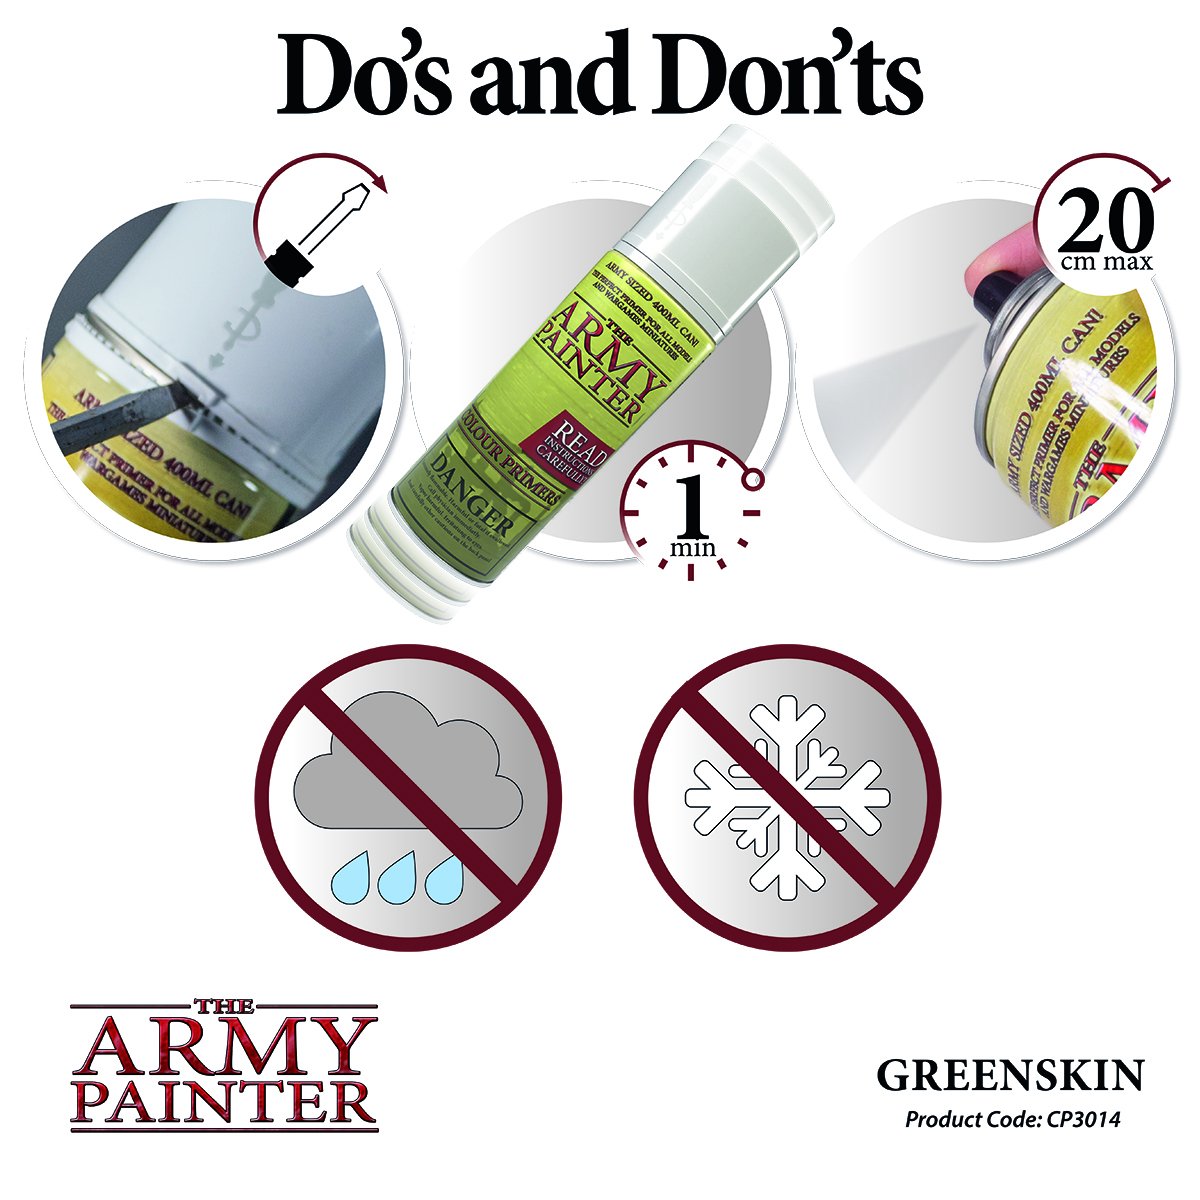 Army Painter: Daemonic Yellow Spray Paint Primer